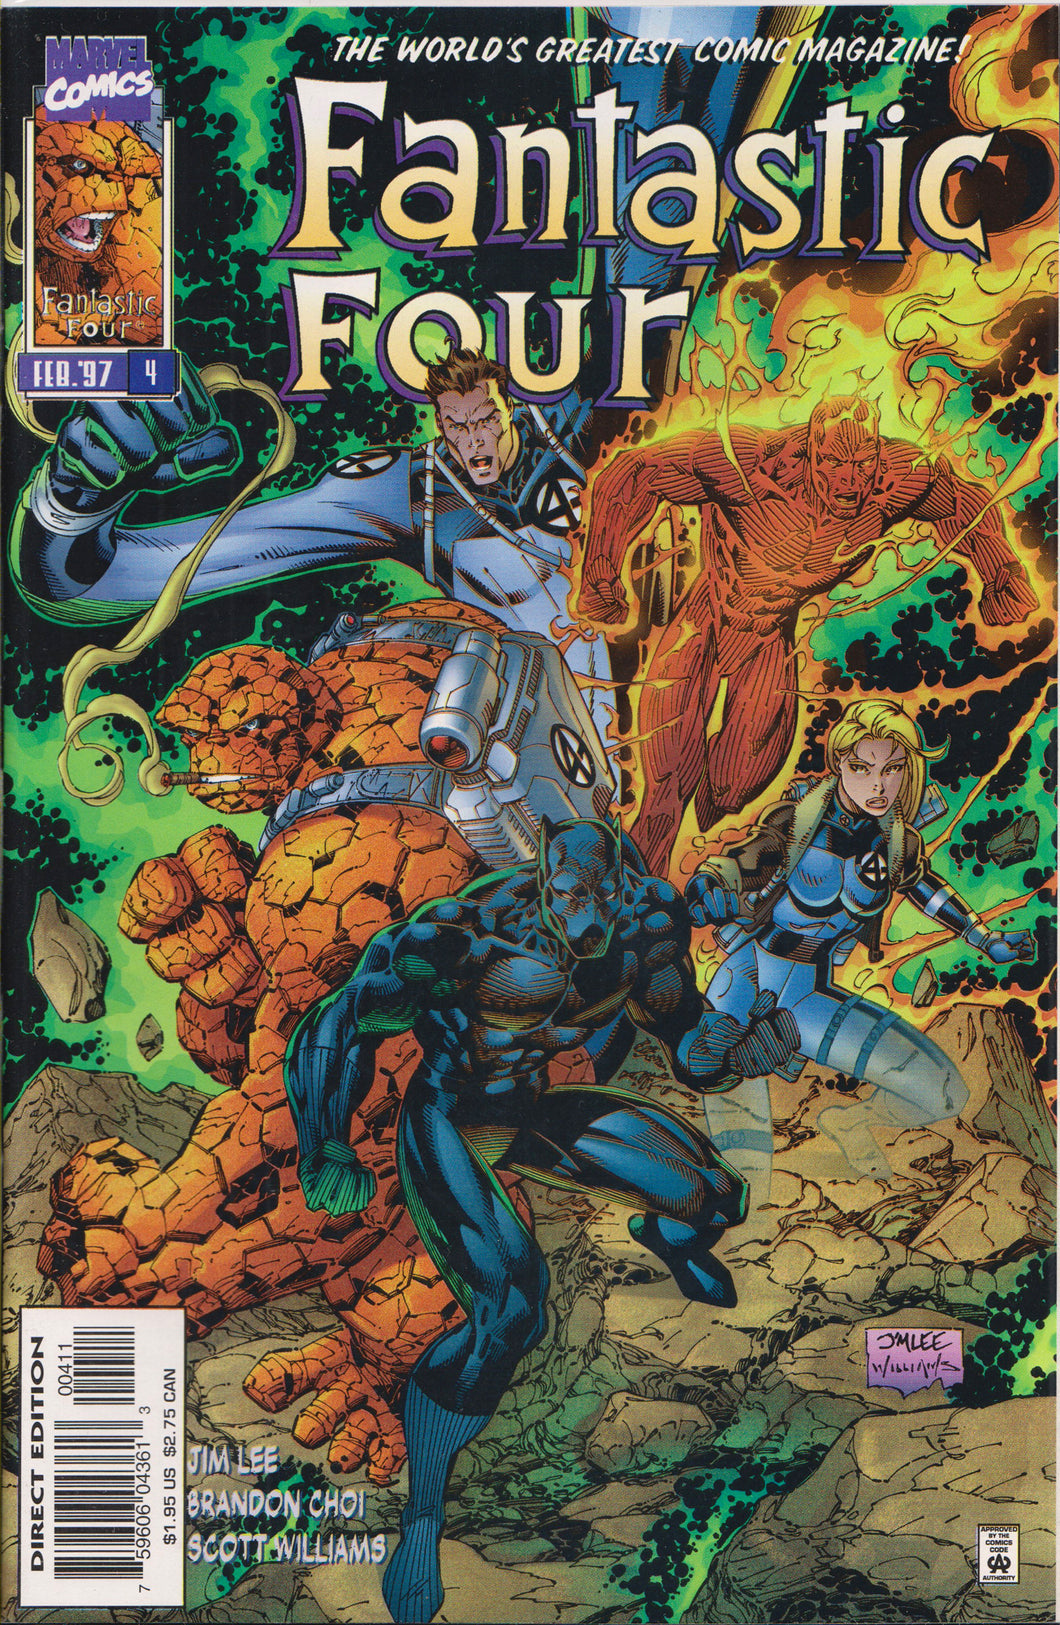 FANTASTIC FOUR #4 (HEROES REBORN) COMIC BOOK ~ Marvel Comics